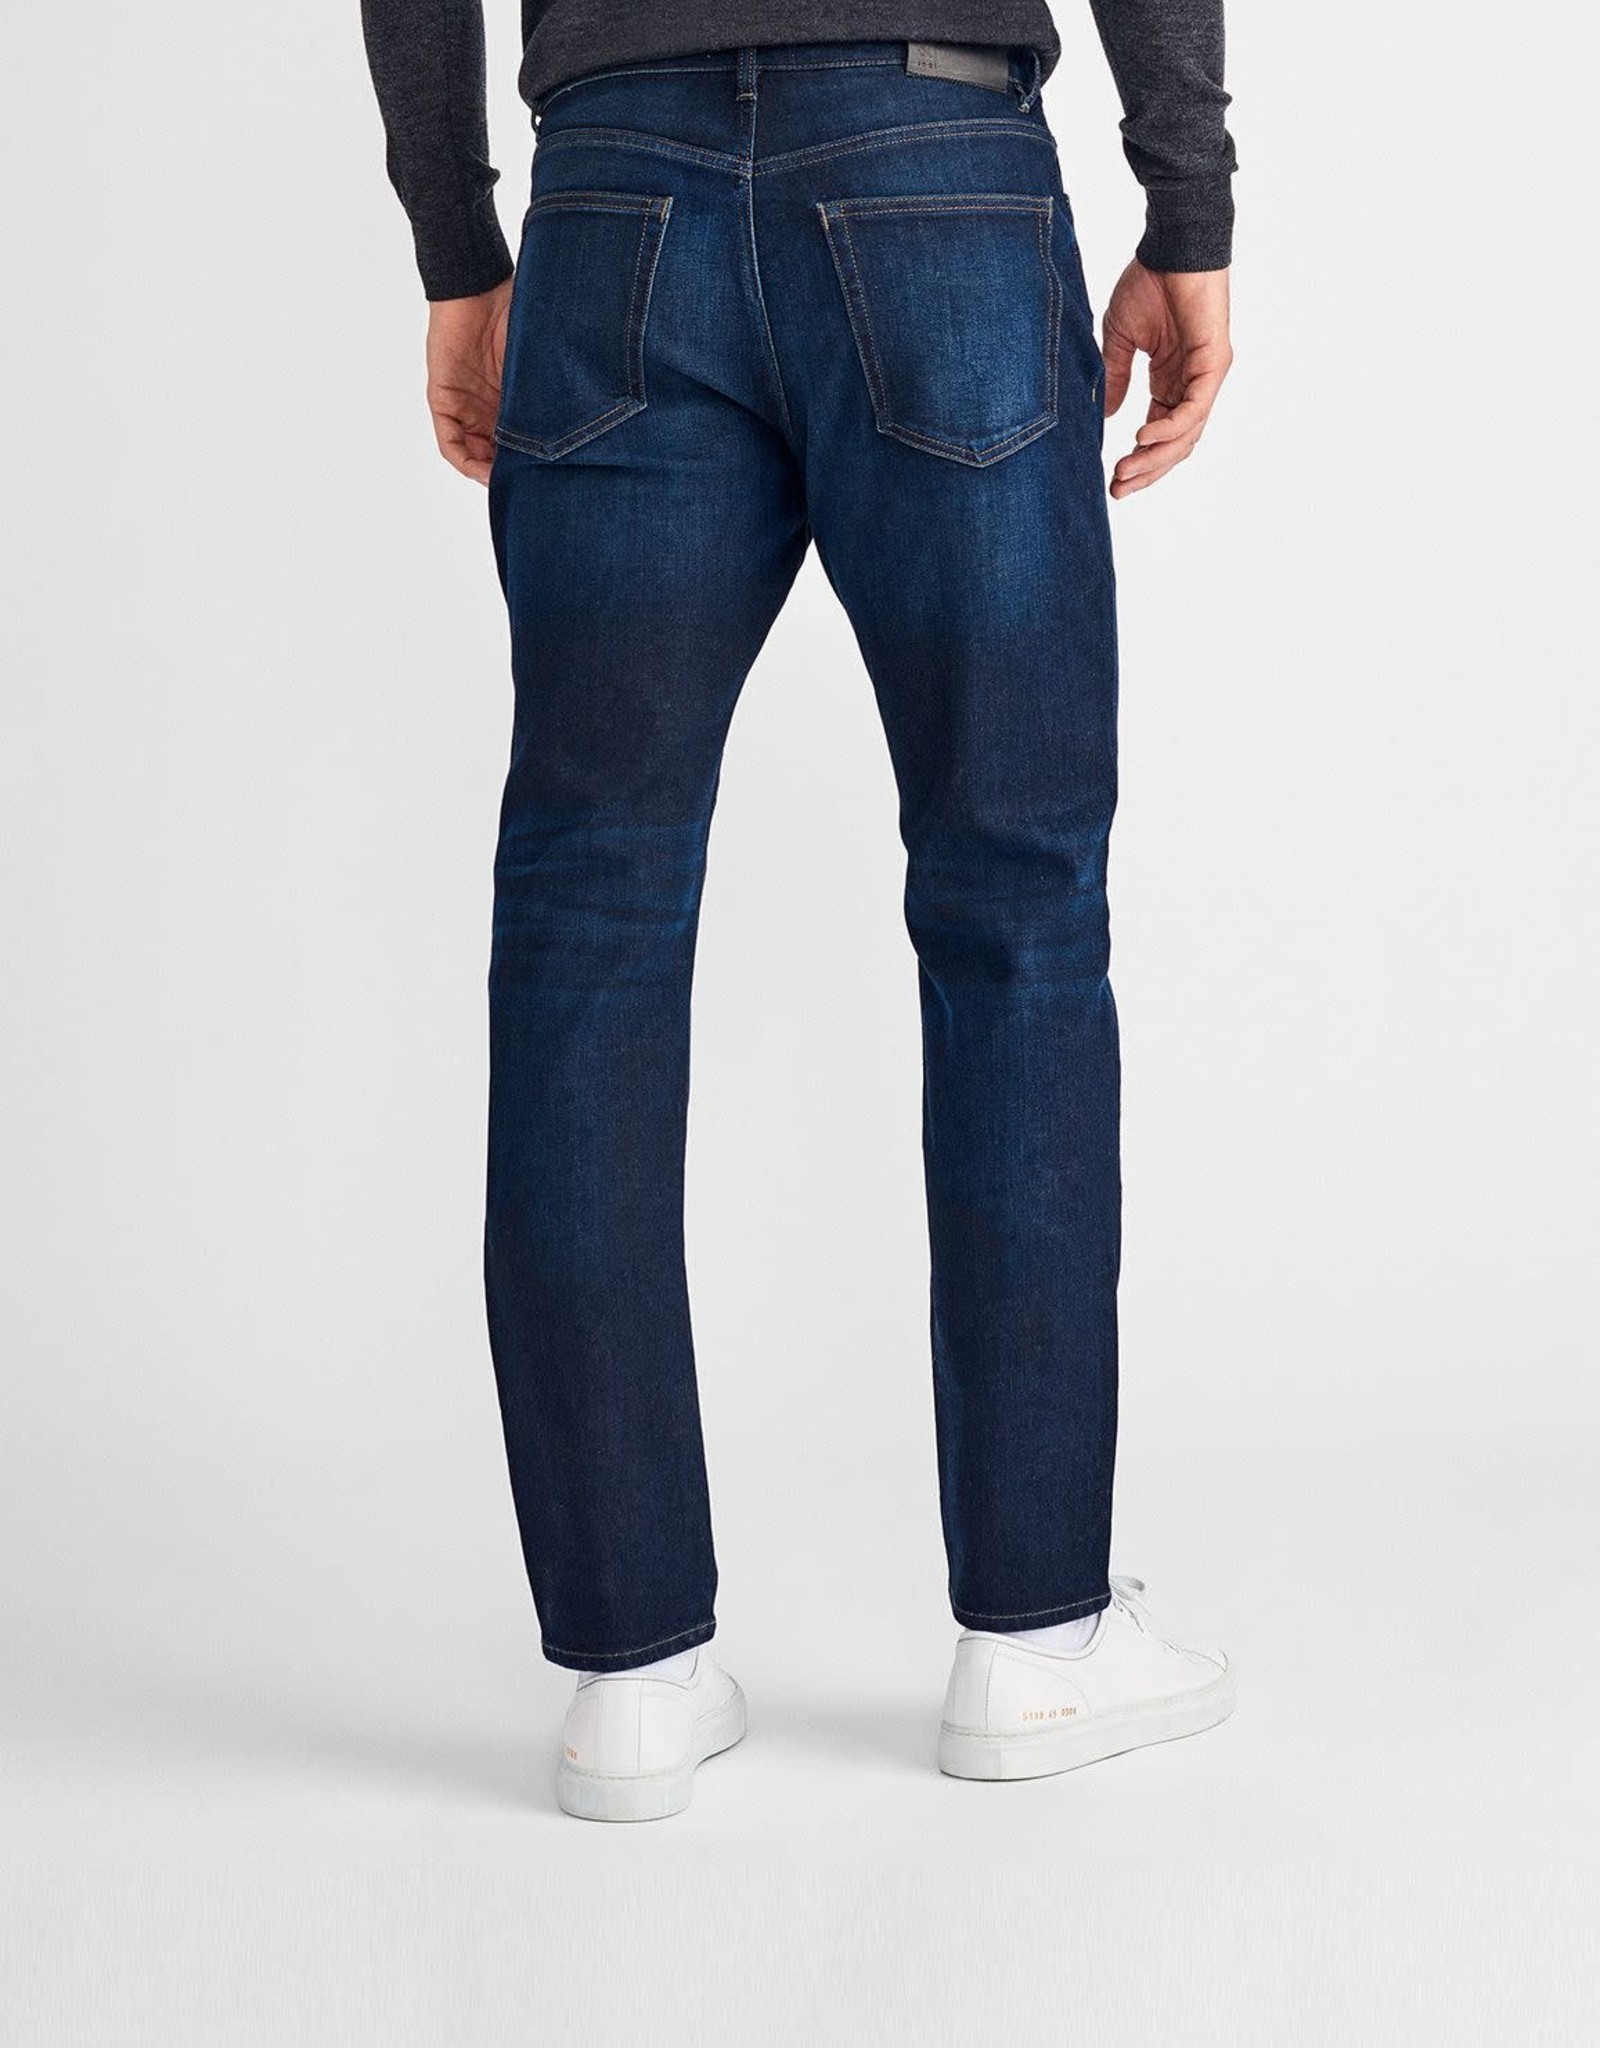 Cooper Tapered Slim Jeans DL1961